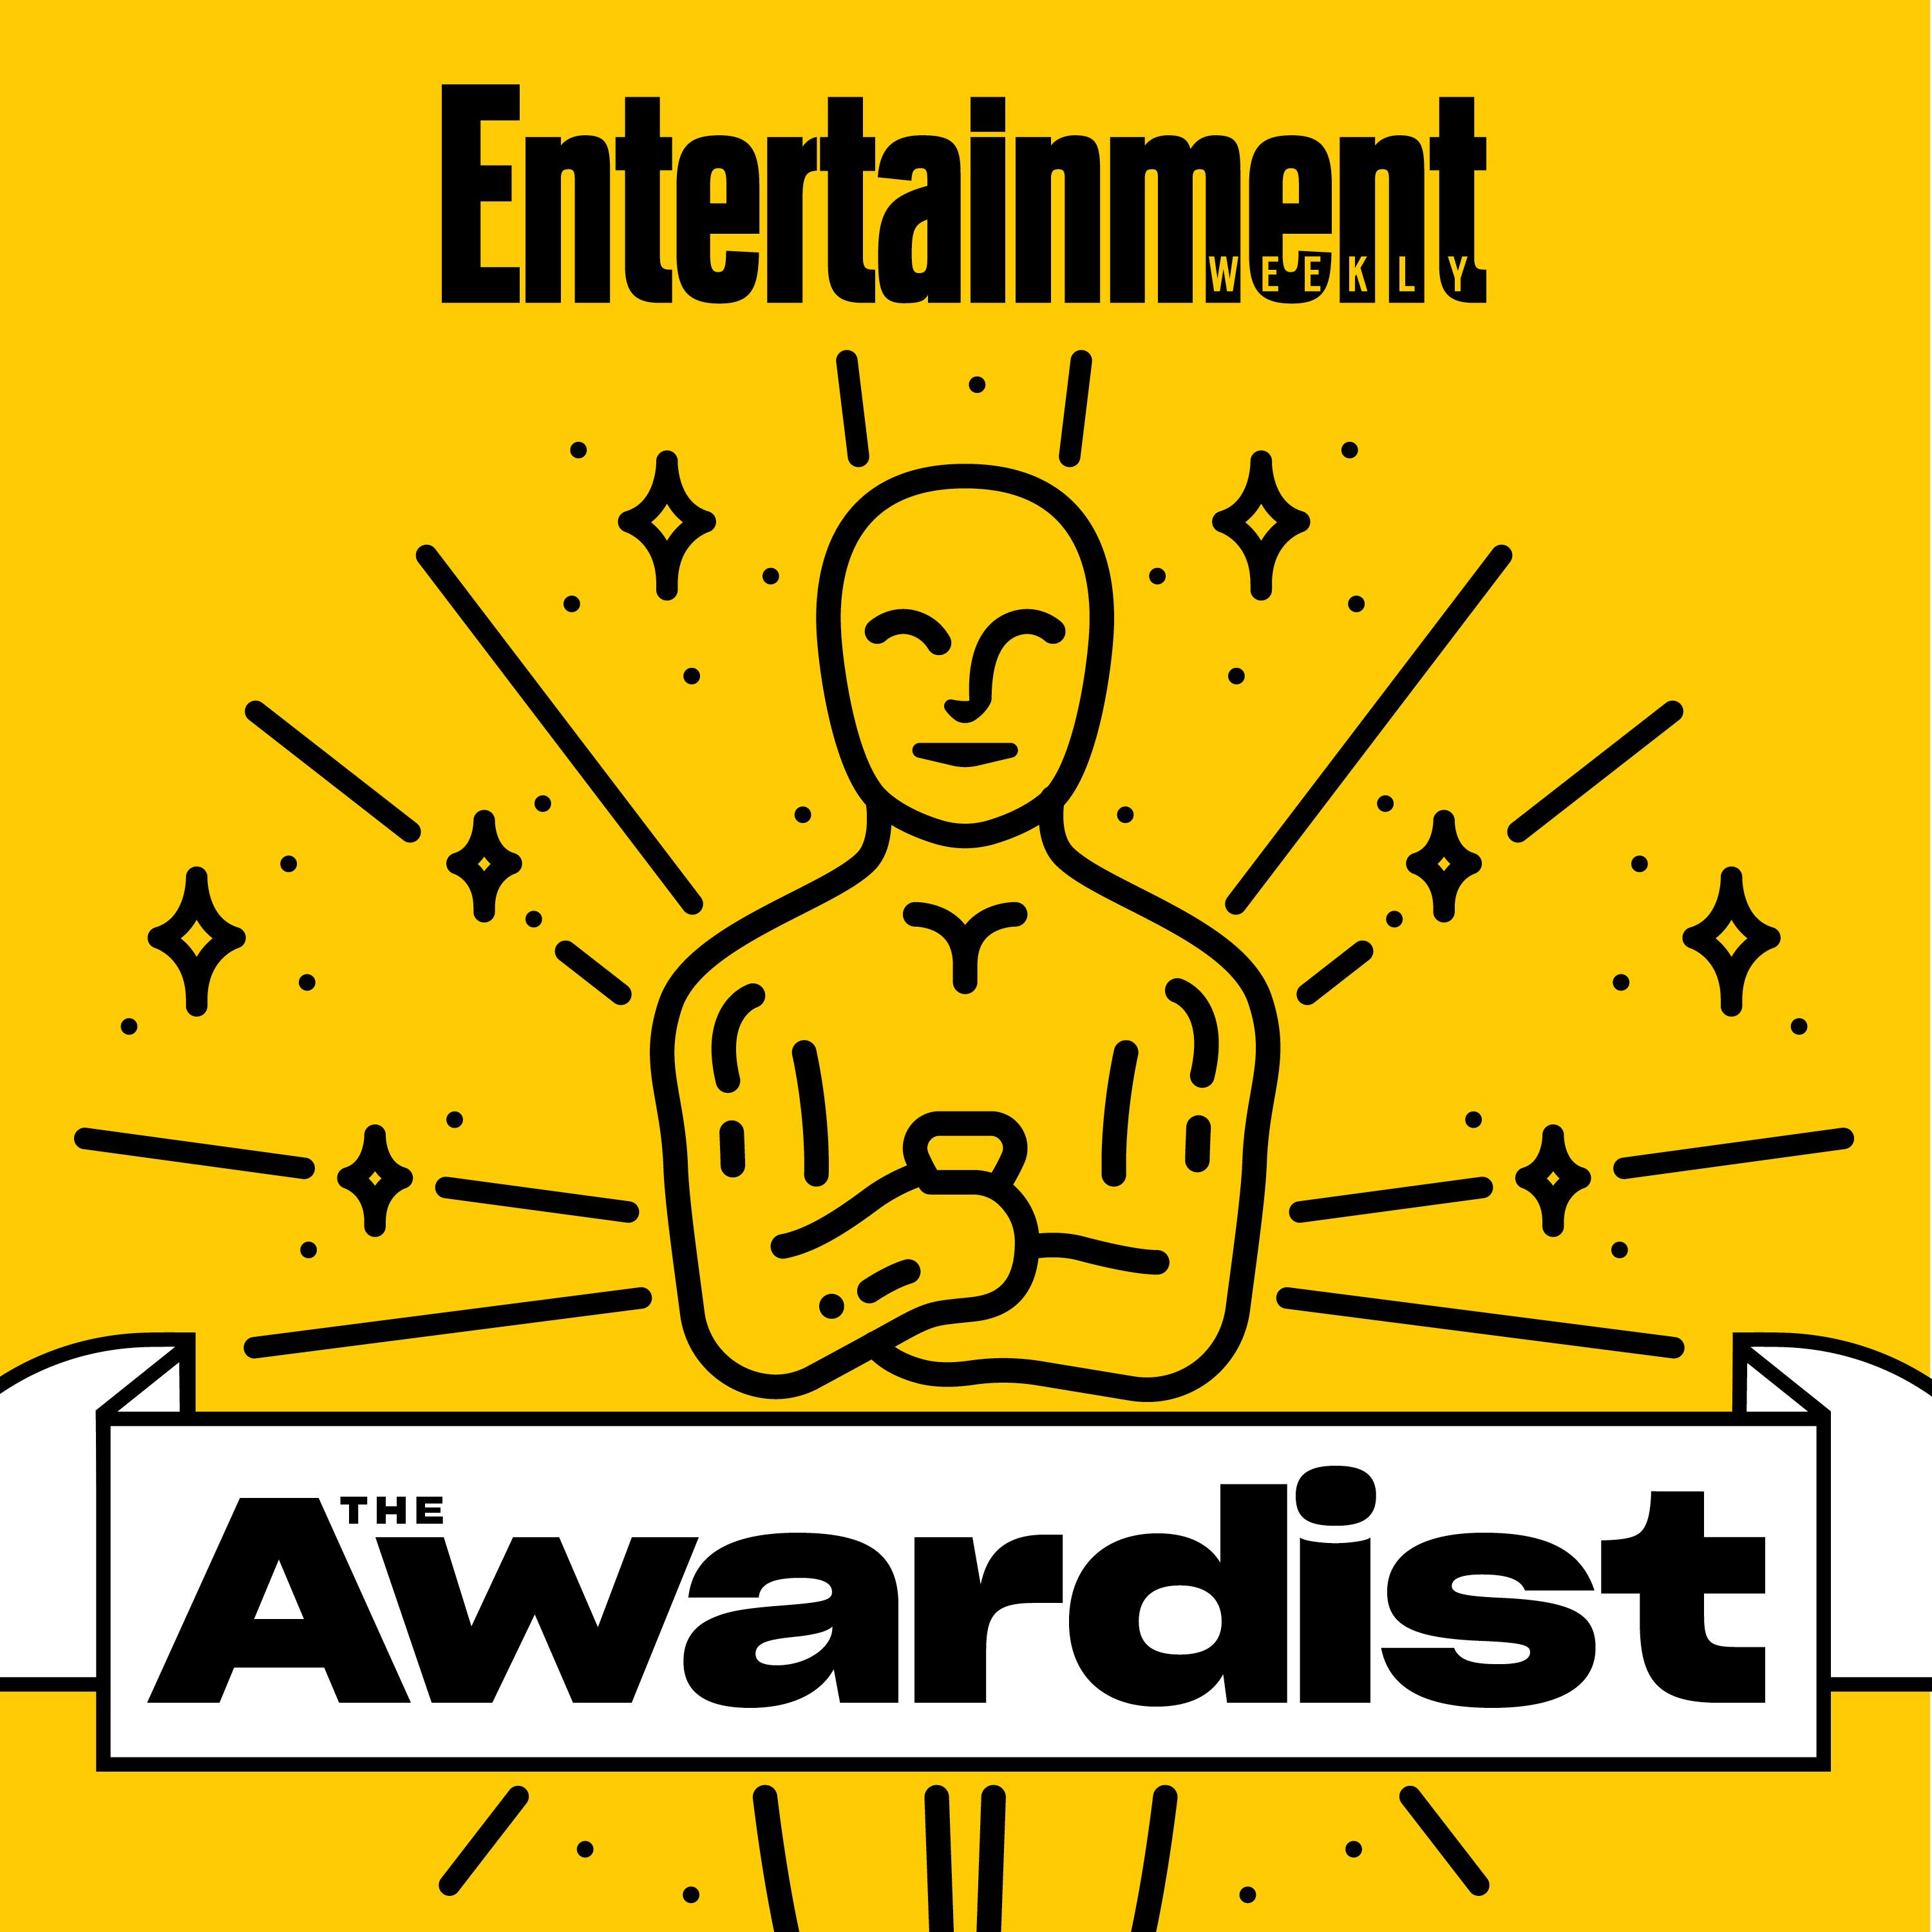 Mank’s Amanda Seyfried, and Oscar nomination predictions